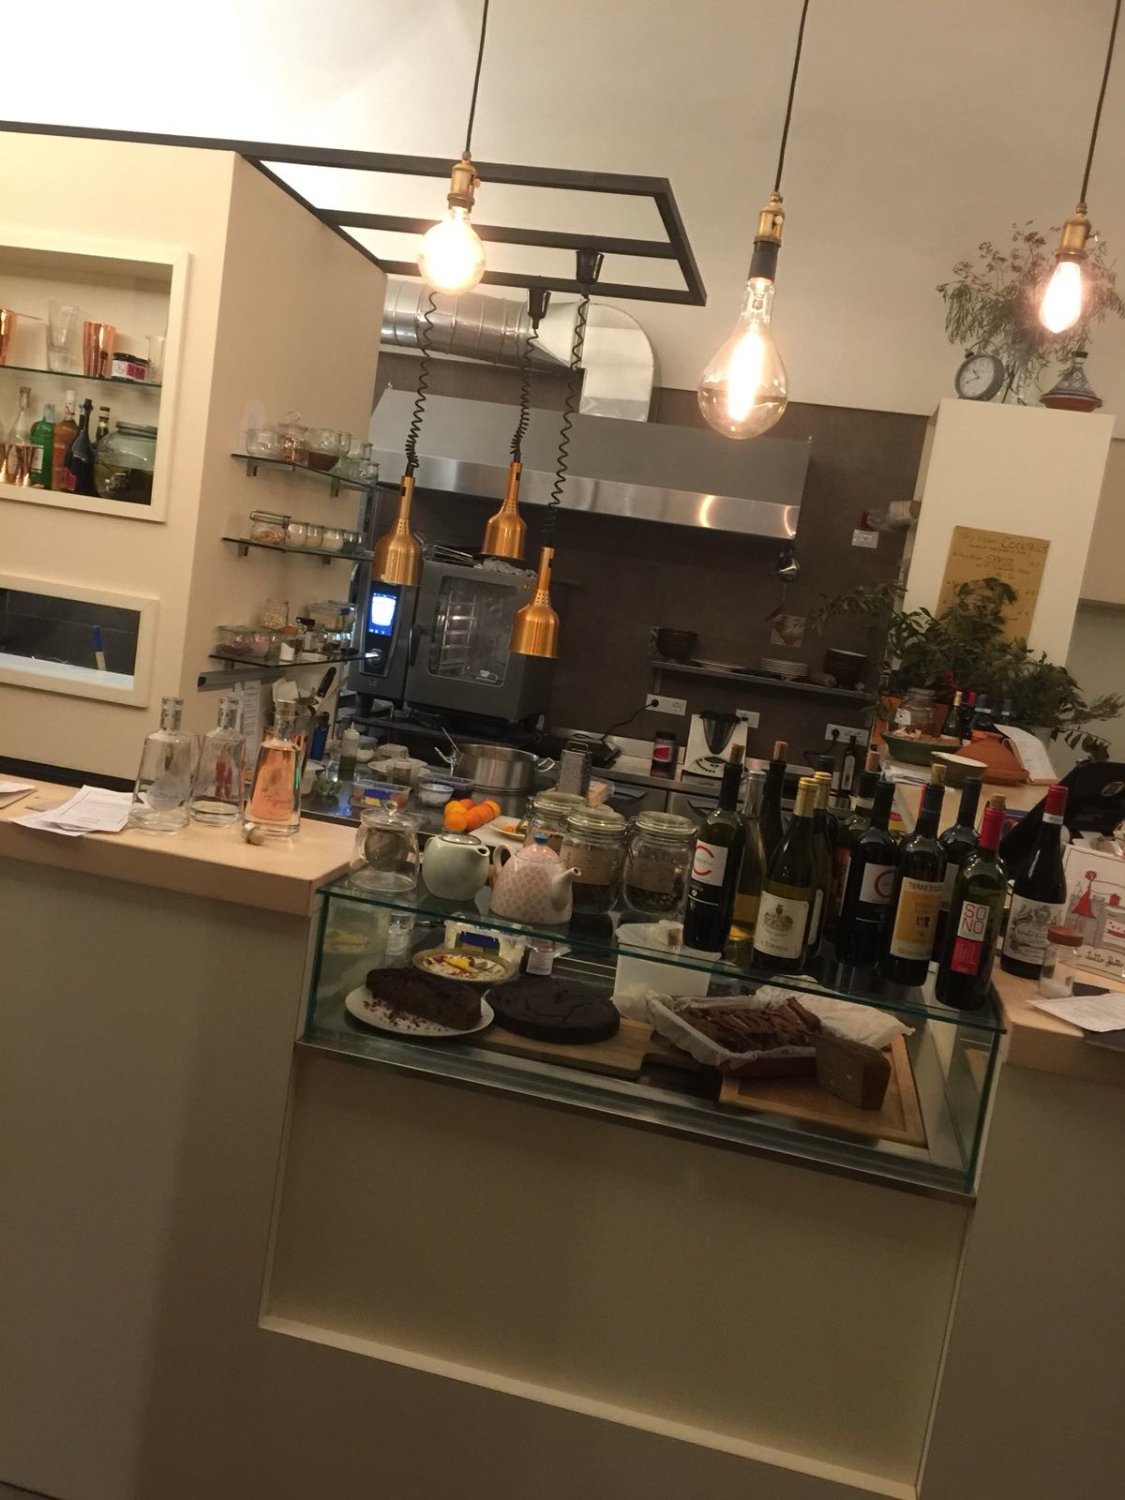 Story Kitchen, Reggio Emilia